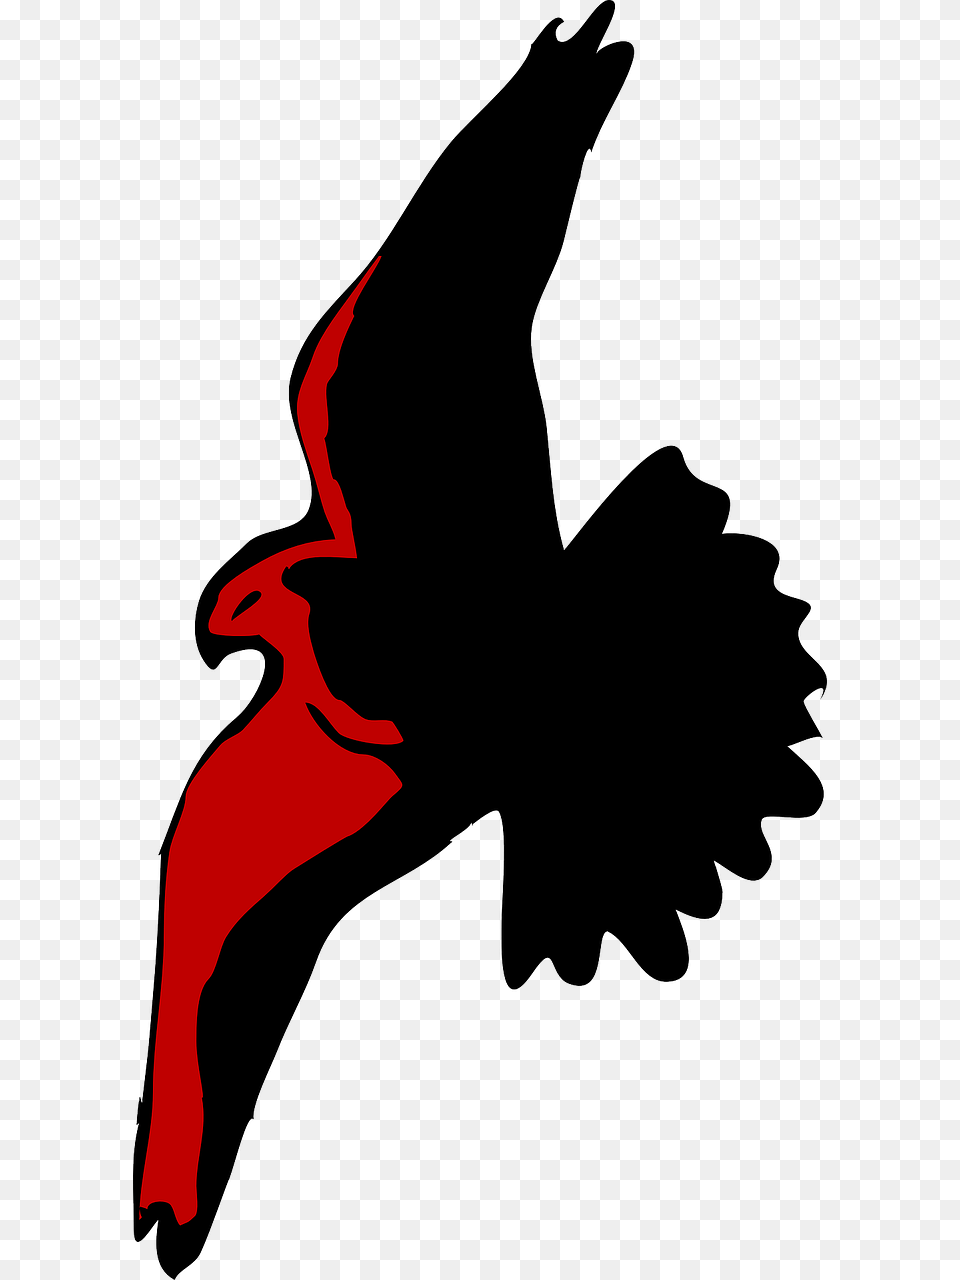 Eagle Silhouette Spread Flying Image Flying Eagle Illustration, Animal, Bird, Blackbird, Beak Free Png Download